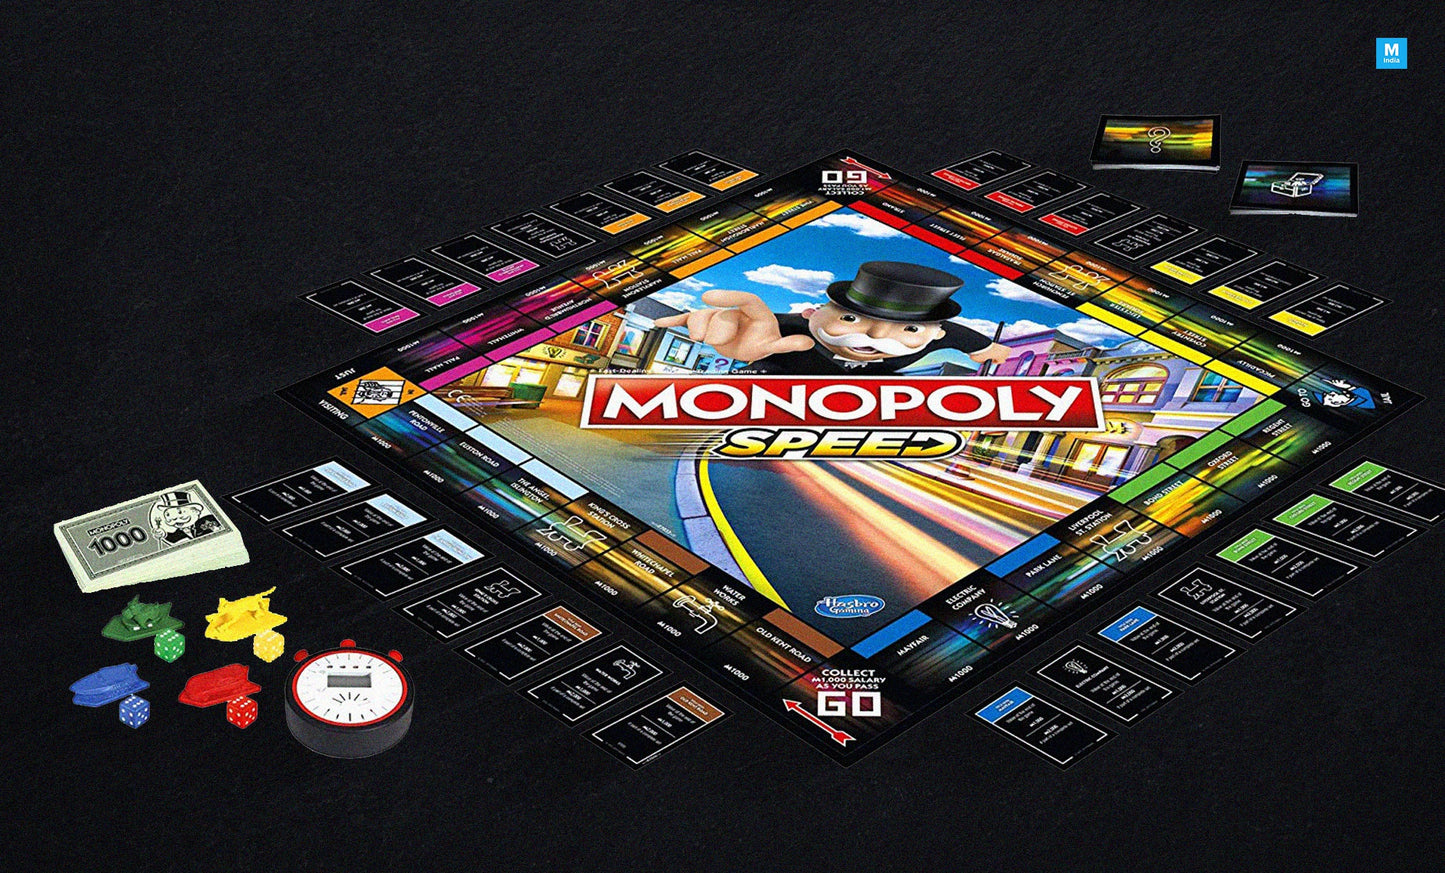 Hasbro - Monopoly Speed (English / French)